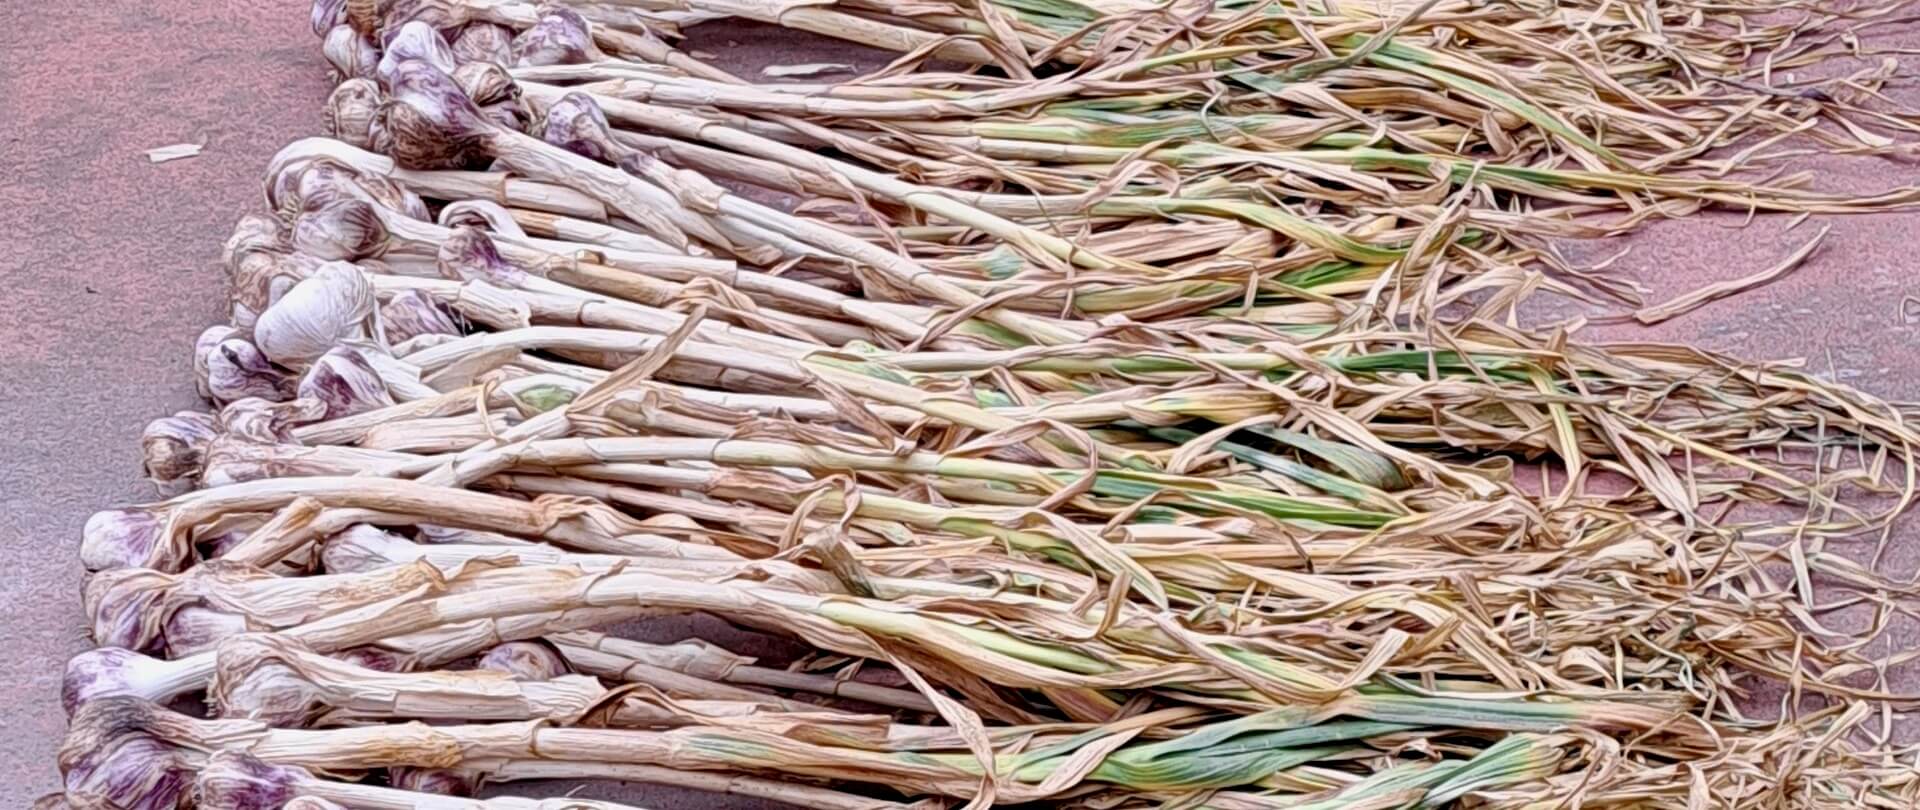 wonderful harvest, great garlic